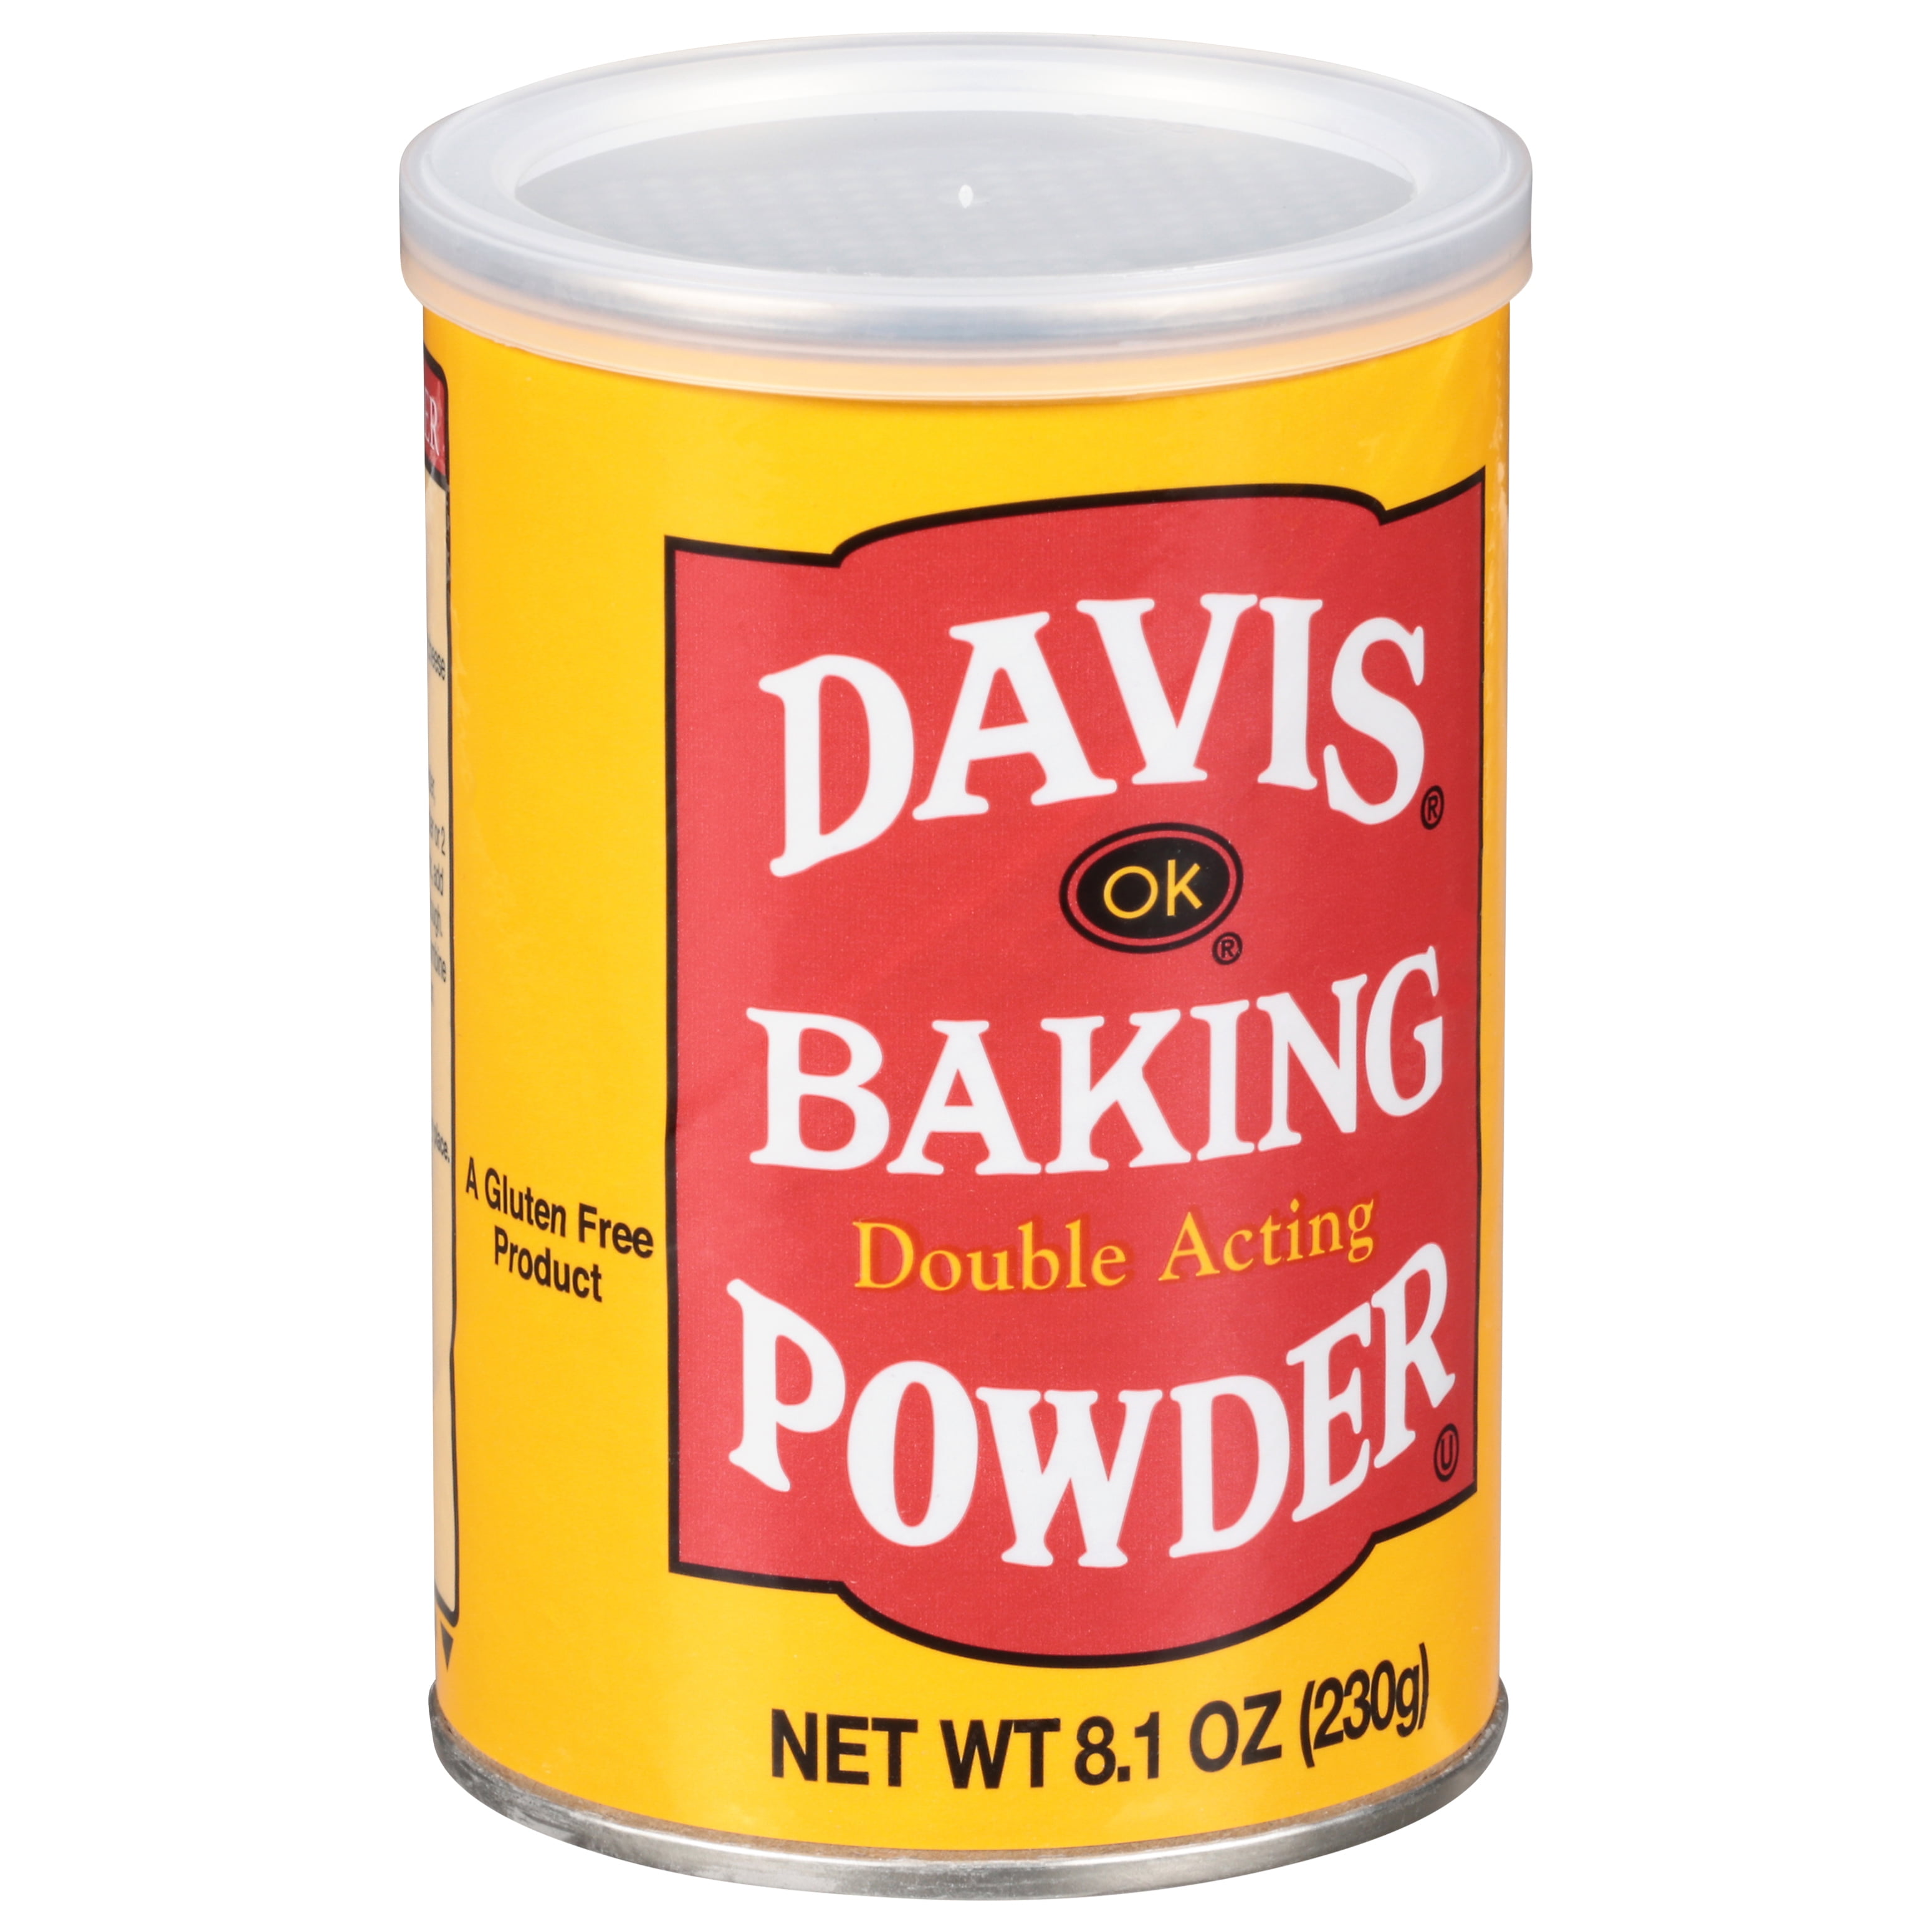 Royal Baking Powder Double Acting, 8.1 oz